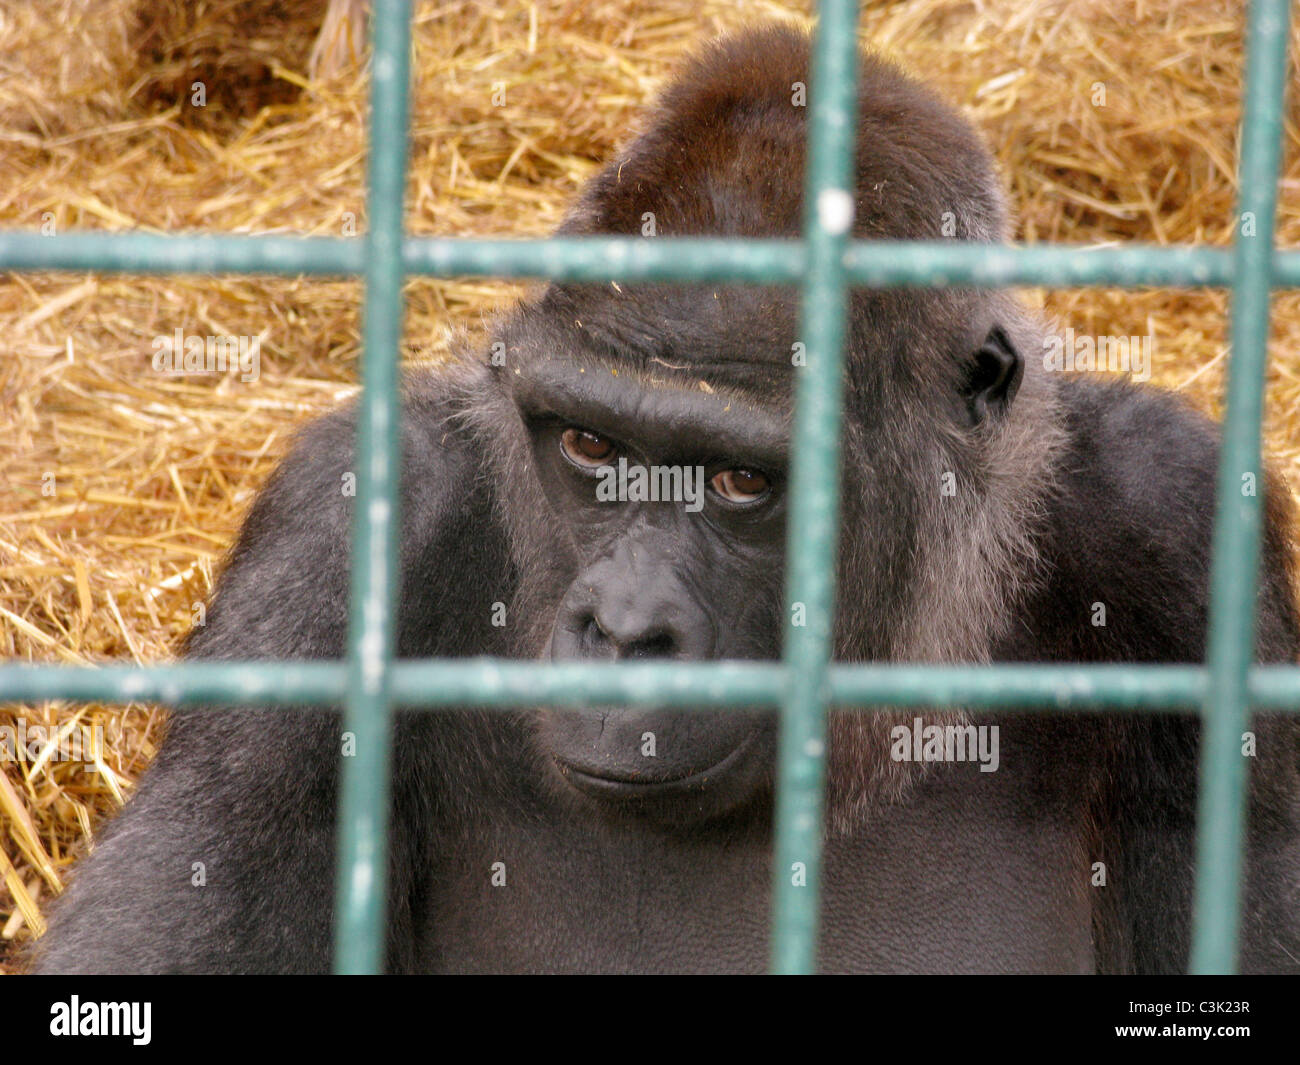 Gorilla in captivity Stock Photo